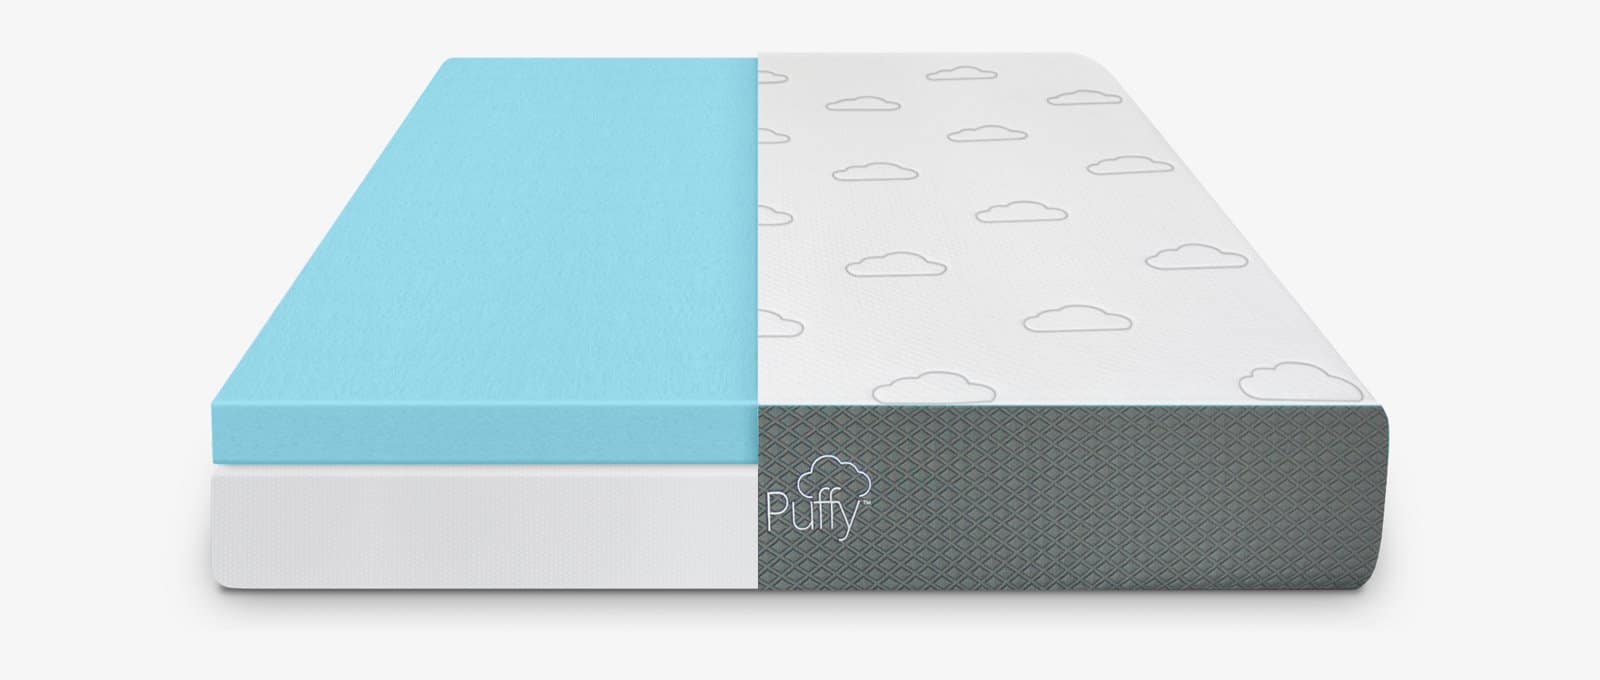 puffy mattress in a box